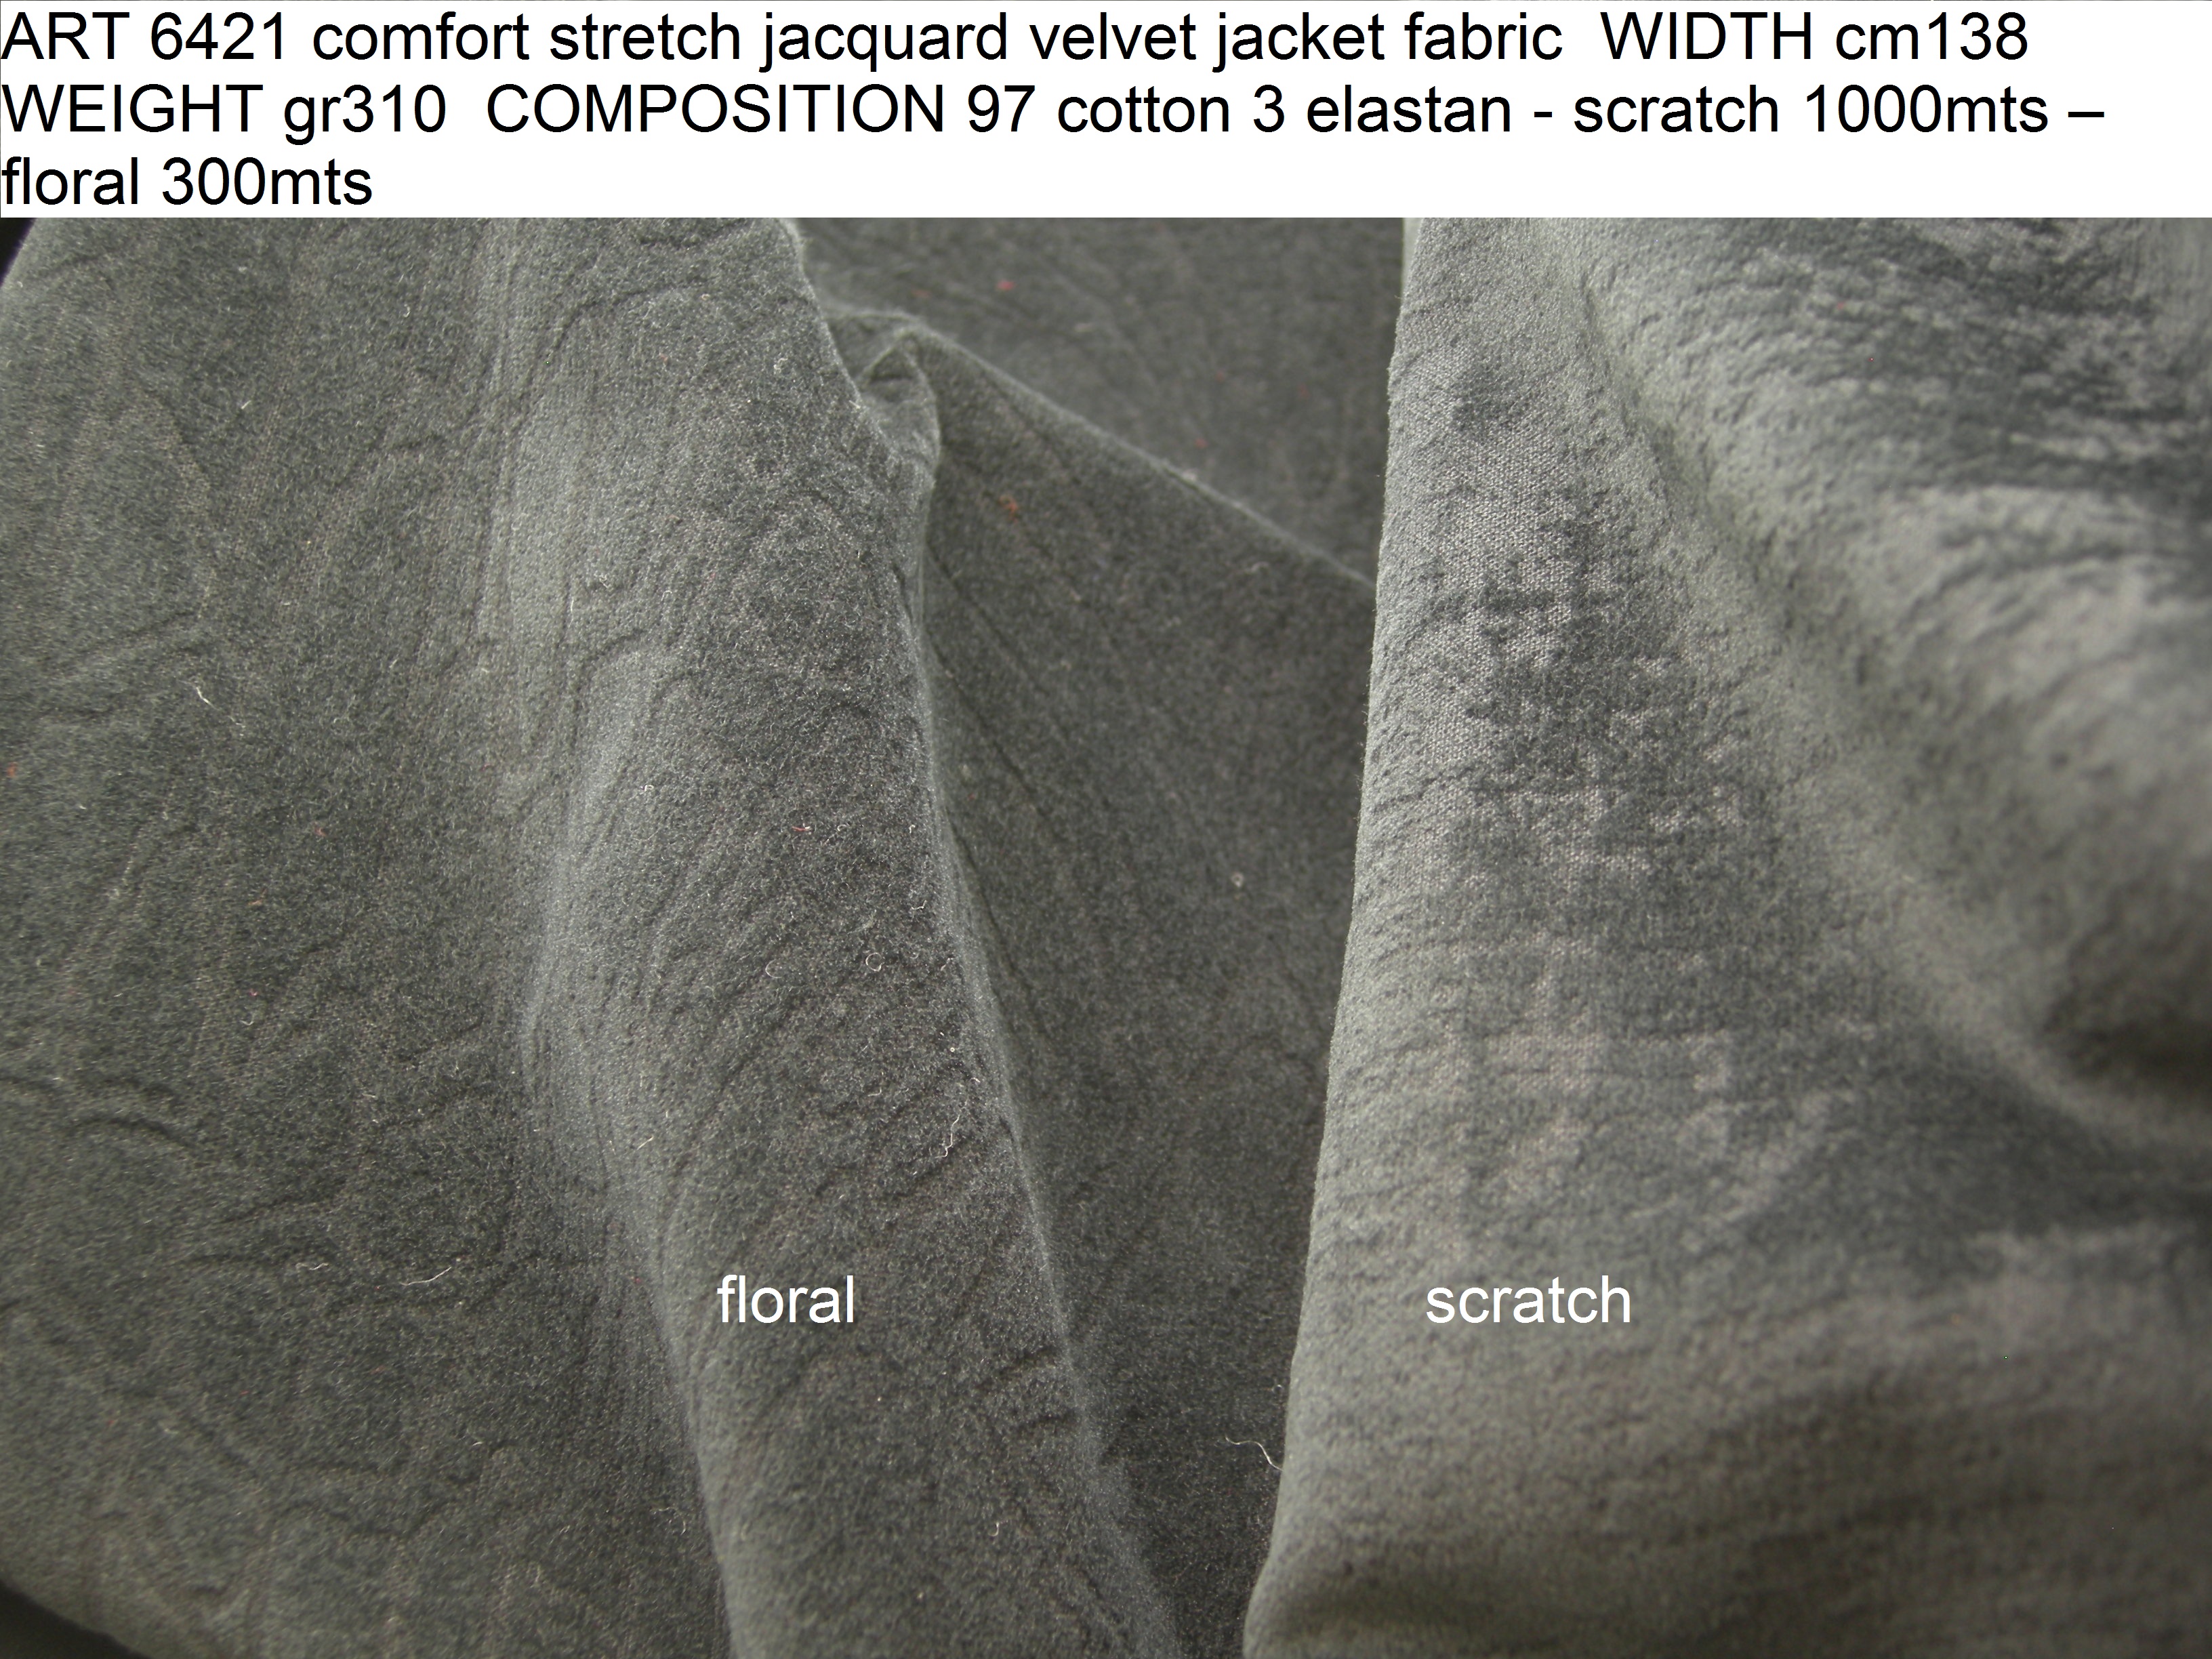 ART 6421 comfort stretch jacquard velvet jacket fabric WIDTH cm138 WEIGHT gr310 COMPOSITION 97 cotton 3 elastan - scratch 1000mts – floral 300mts